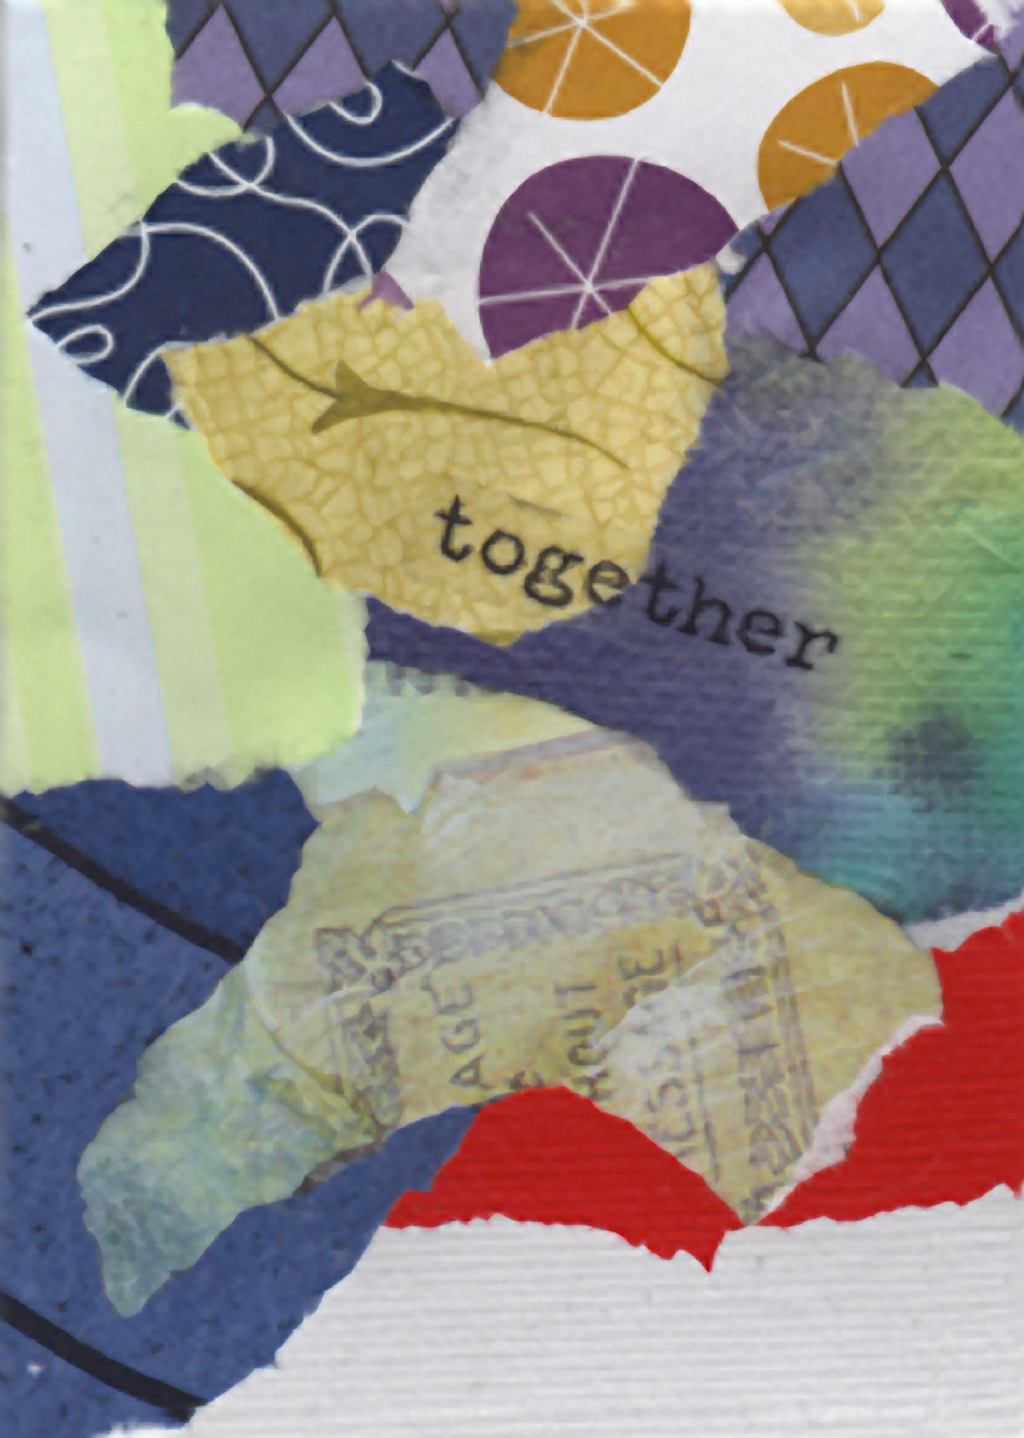 Collaged Words: Together